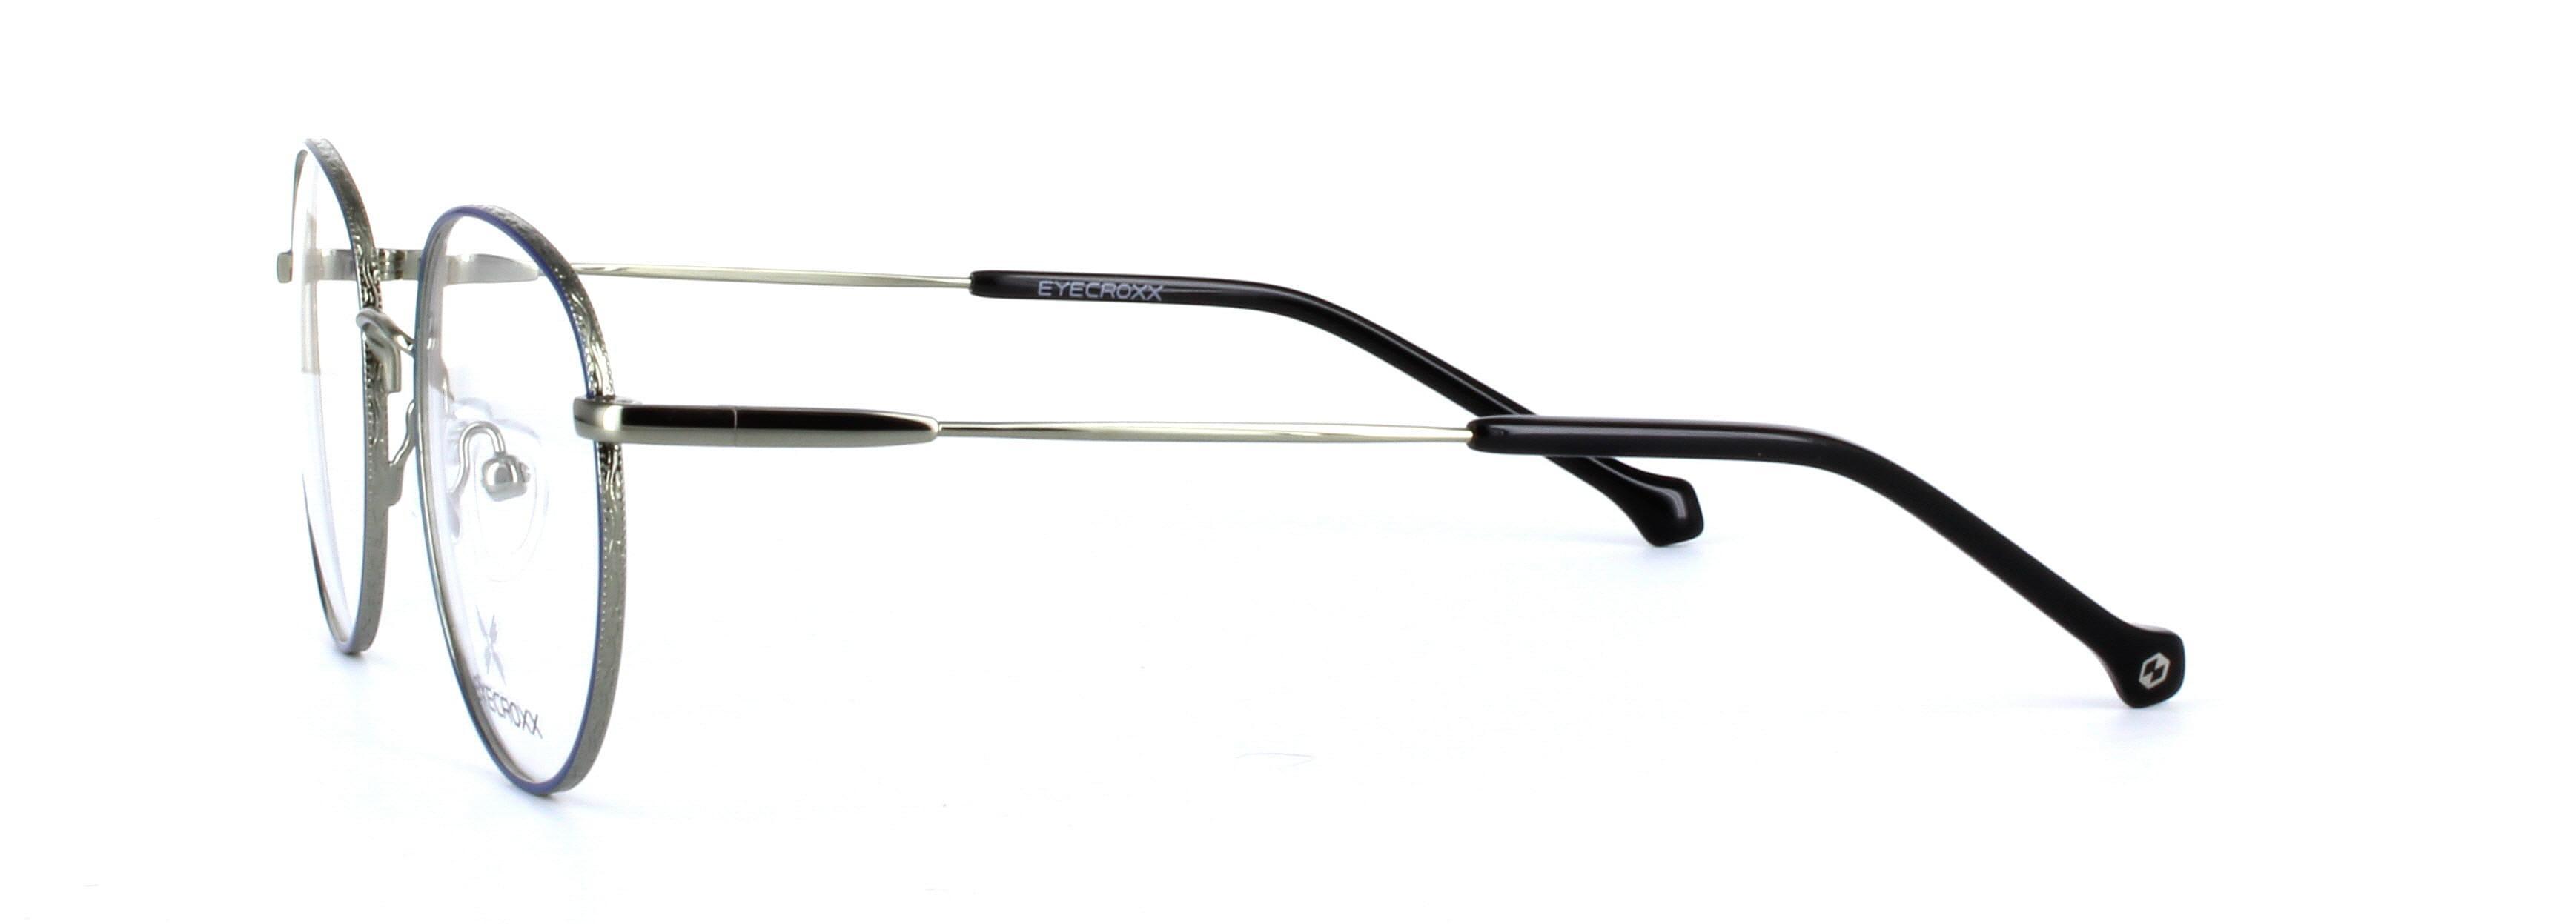 Eyecroxx 570-C3 Blue Full Rim Round Metal Glasses - Image View 2